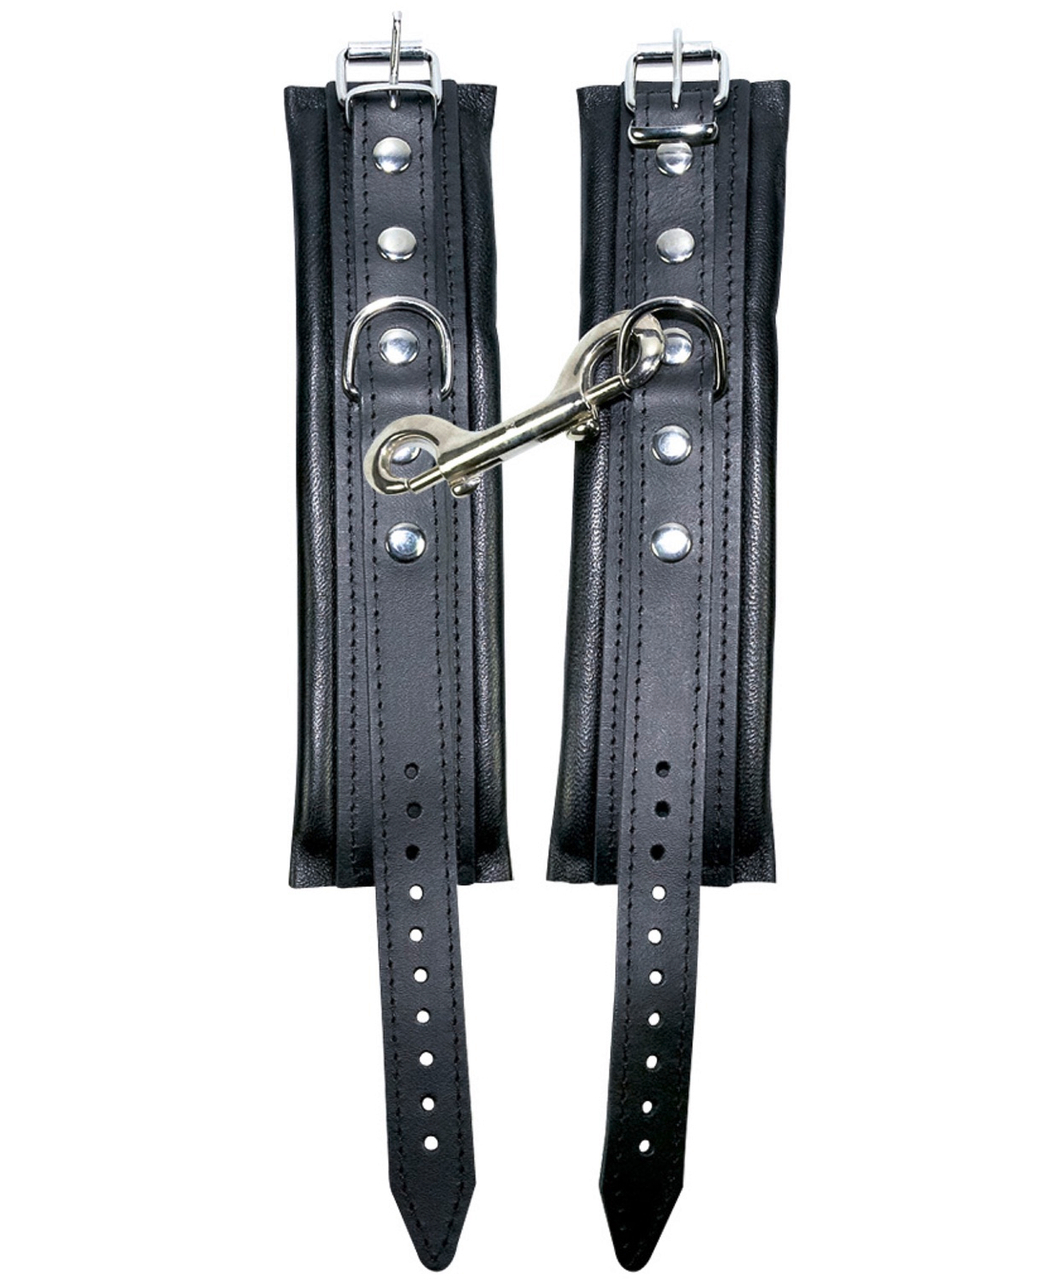 Zado Leather Cuffs